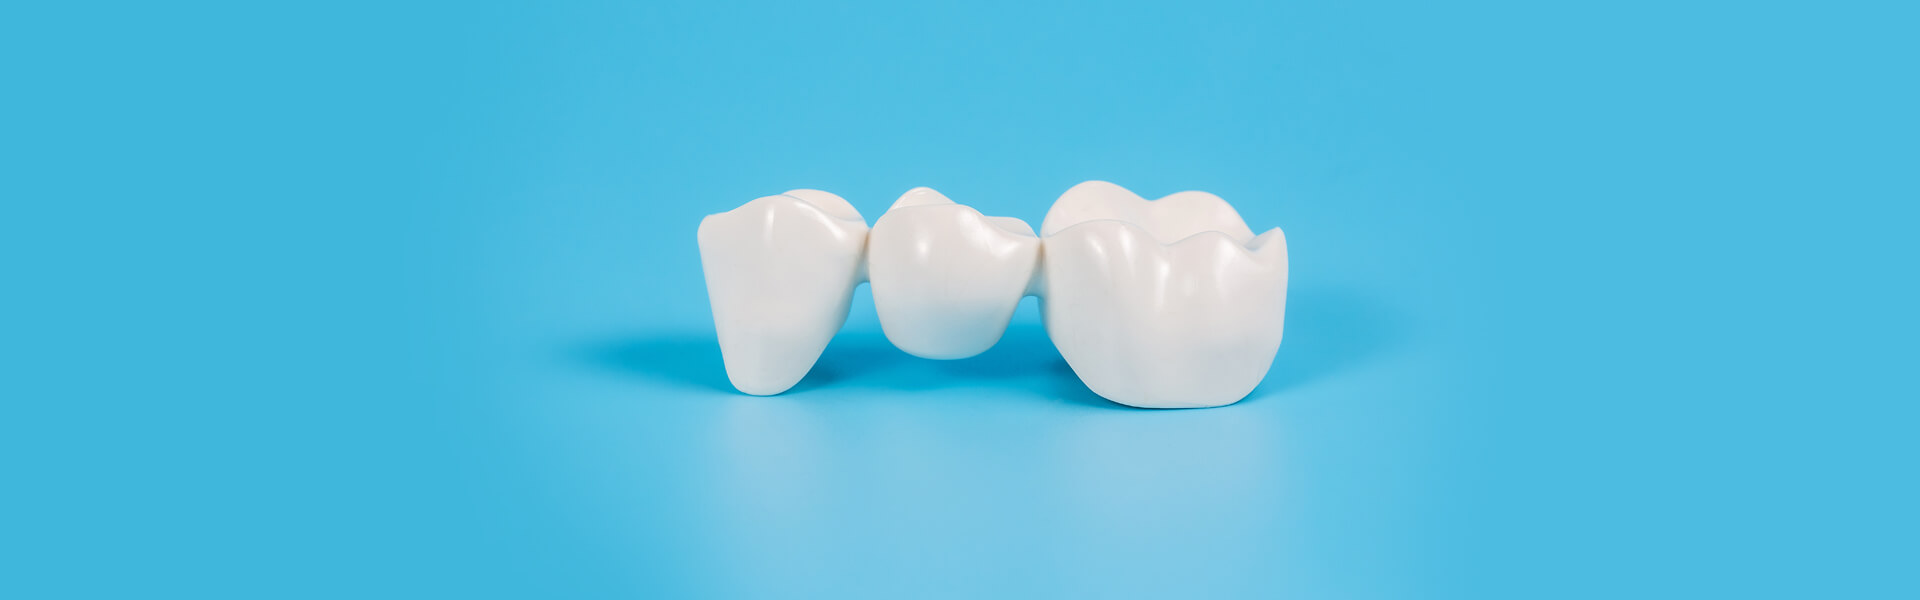 Why Choose Dental Bridges to Replace Missing Teeth?